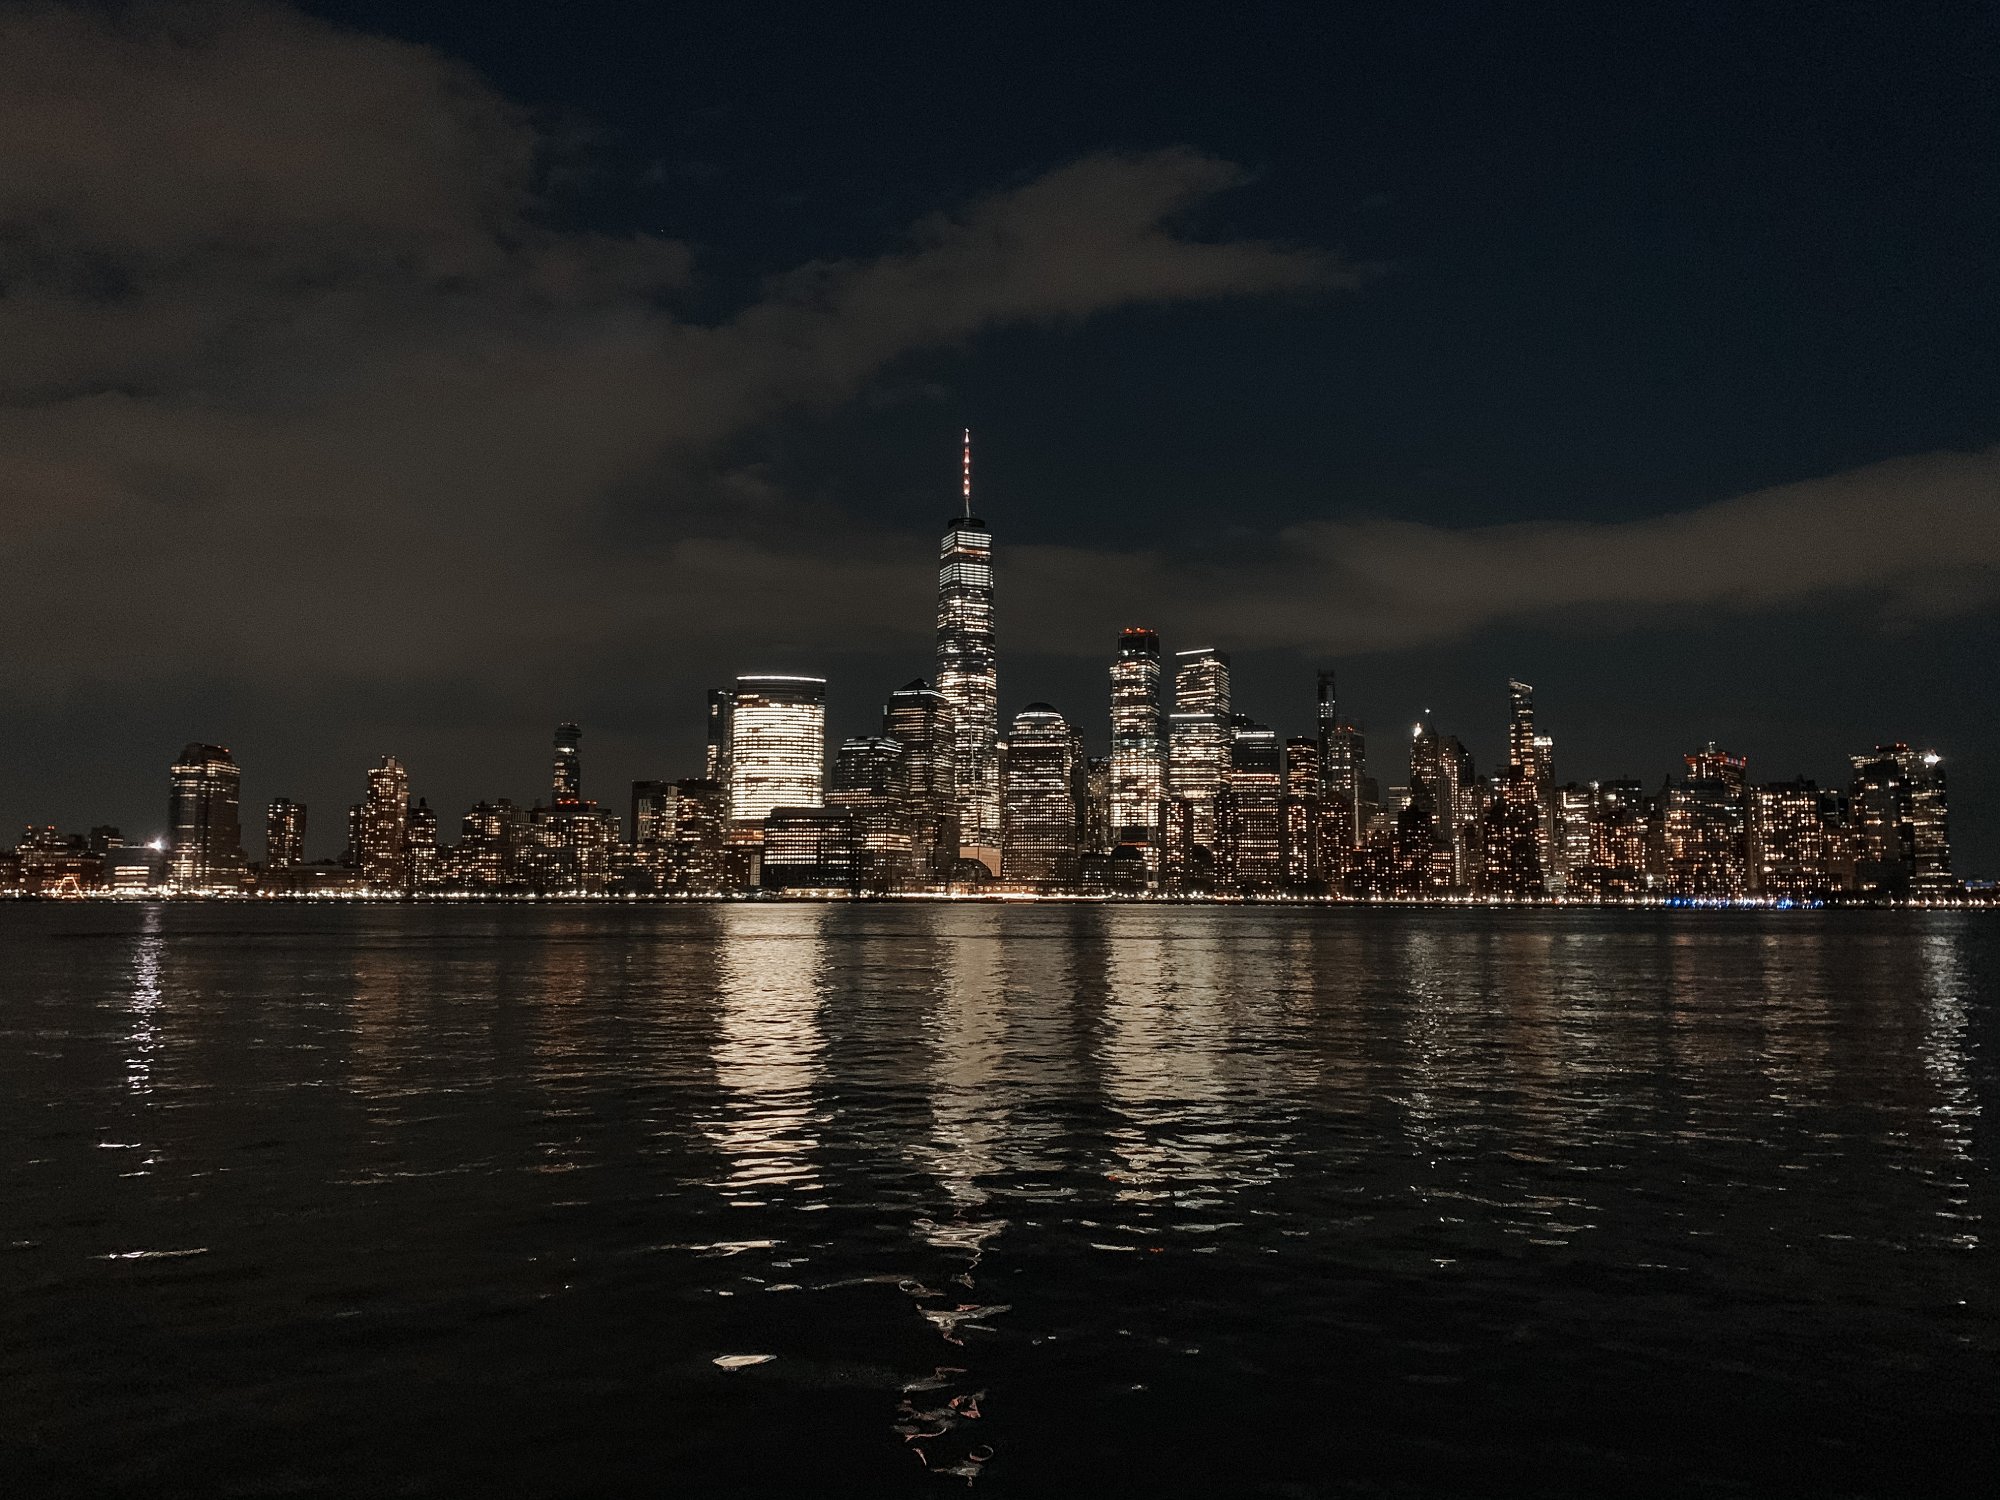 A night view of Jersey City's skyline